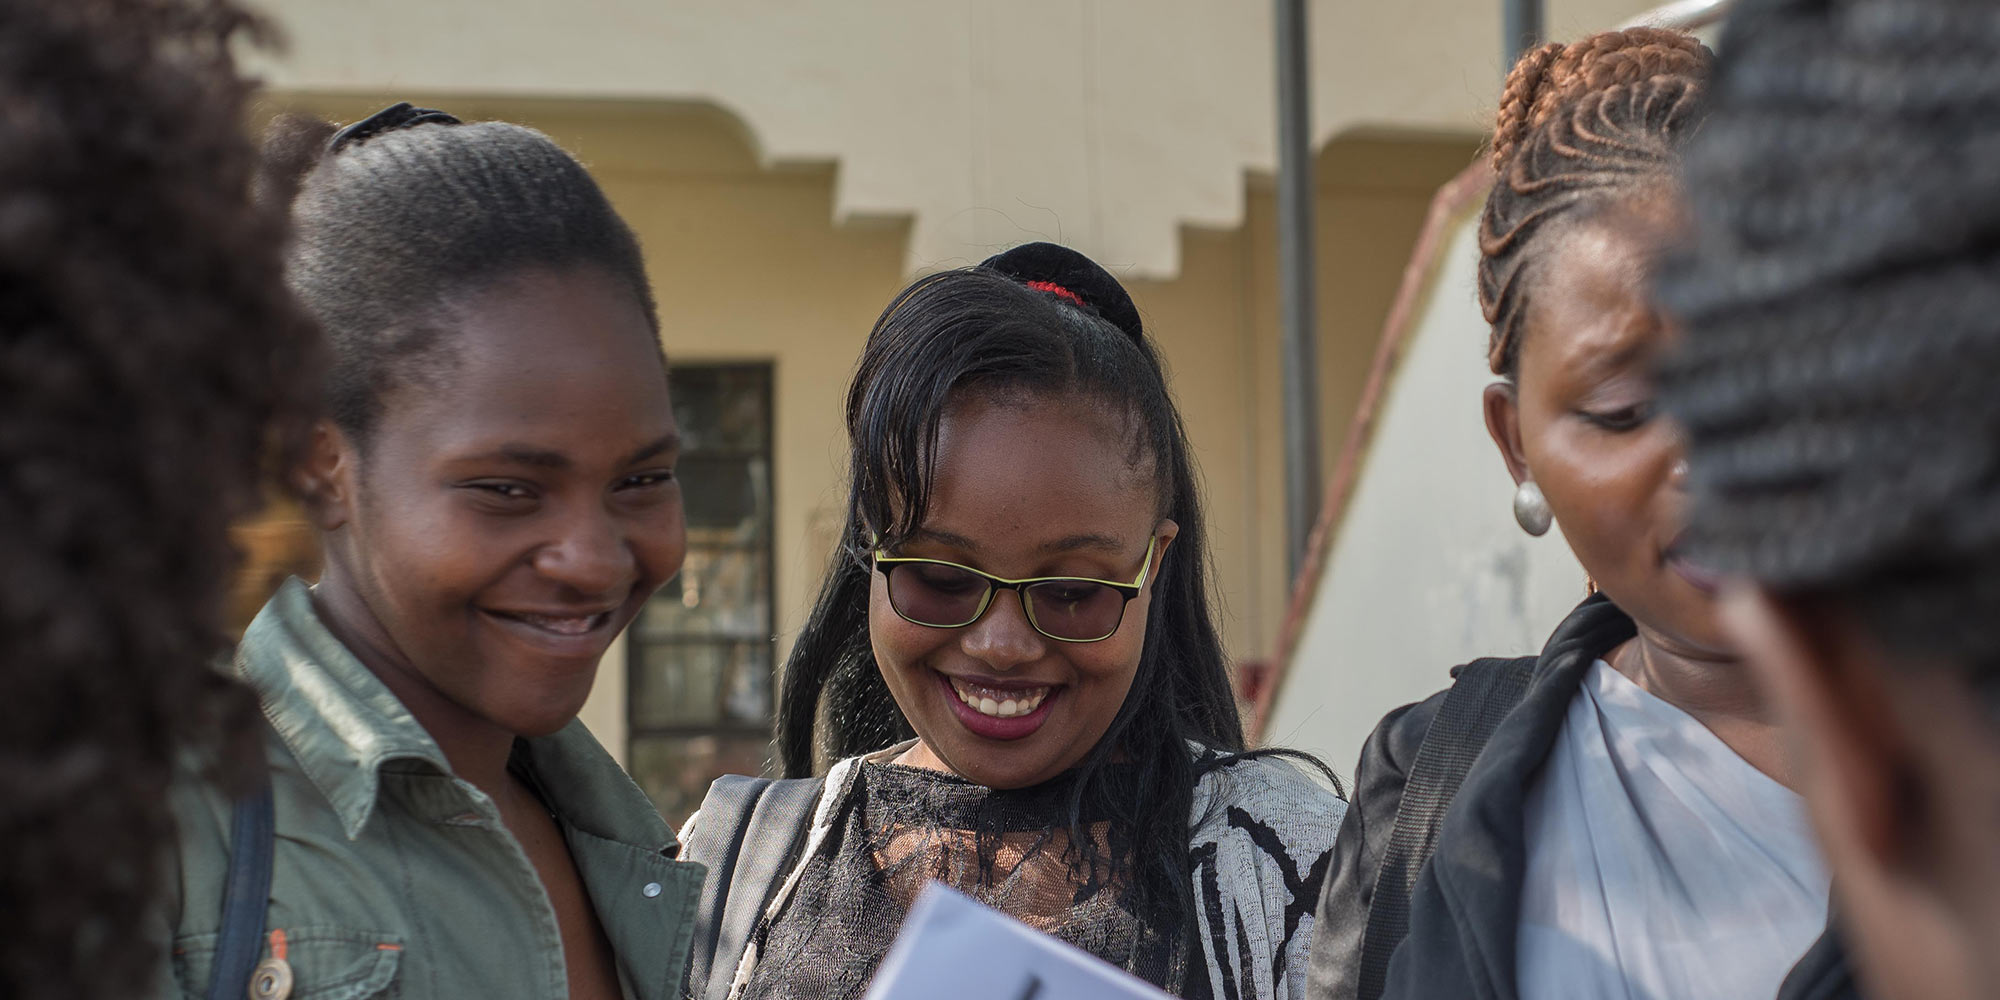 Four sub-Saharan African university students in Nairobi